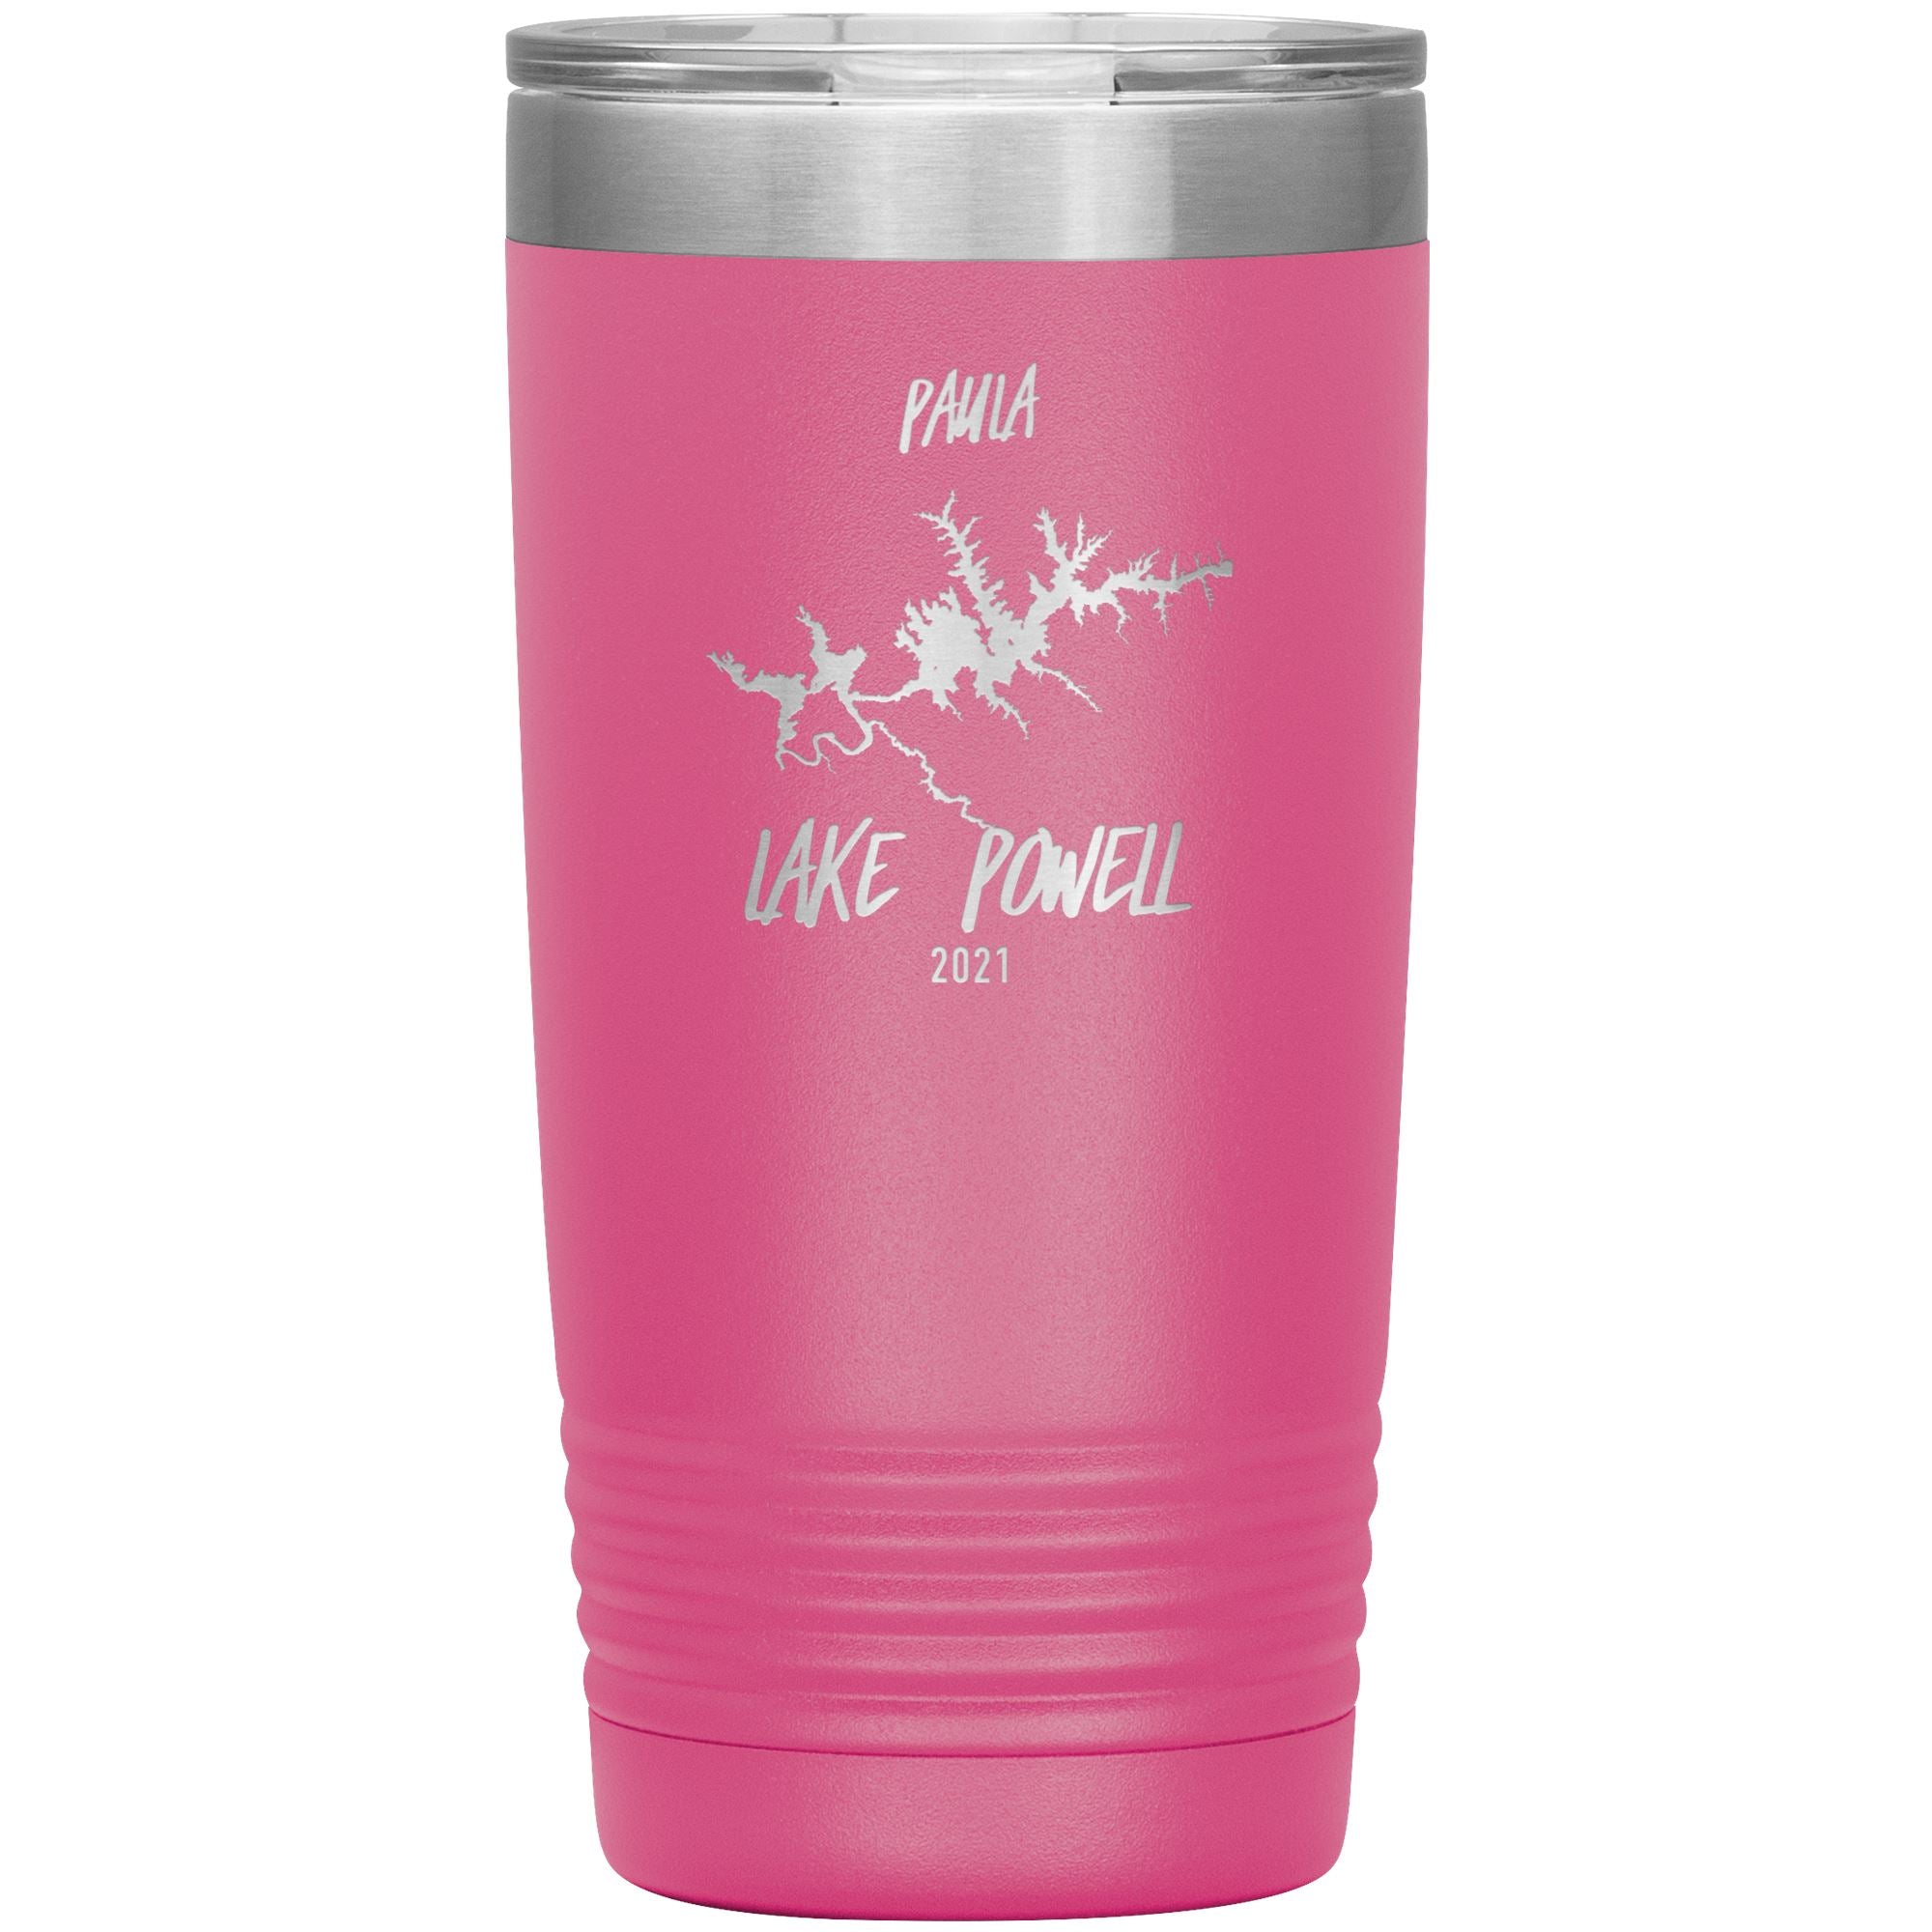 20oz Lake Powell Tumbler 2021 - Paula Tumblers Pink 